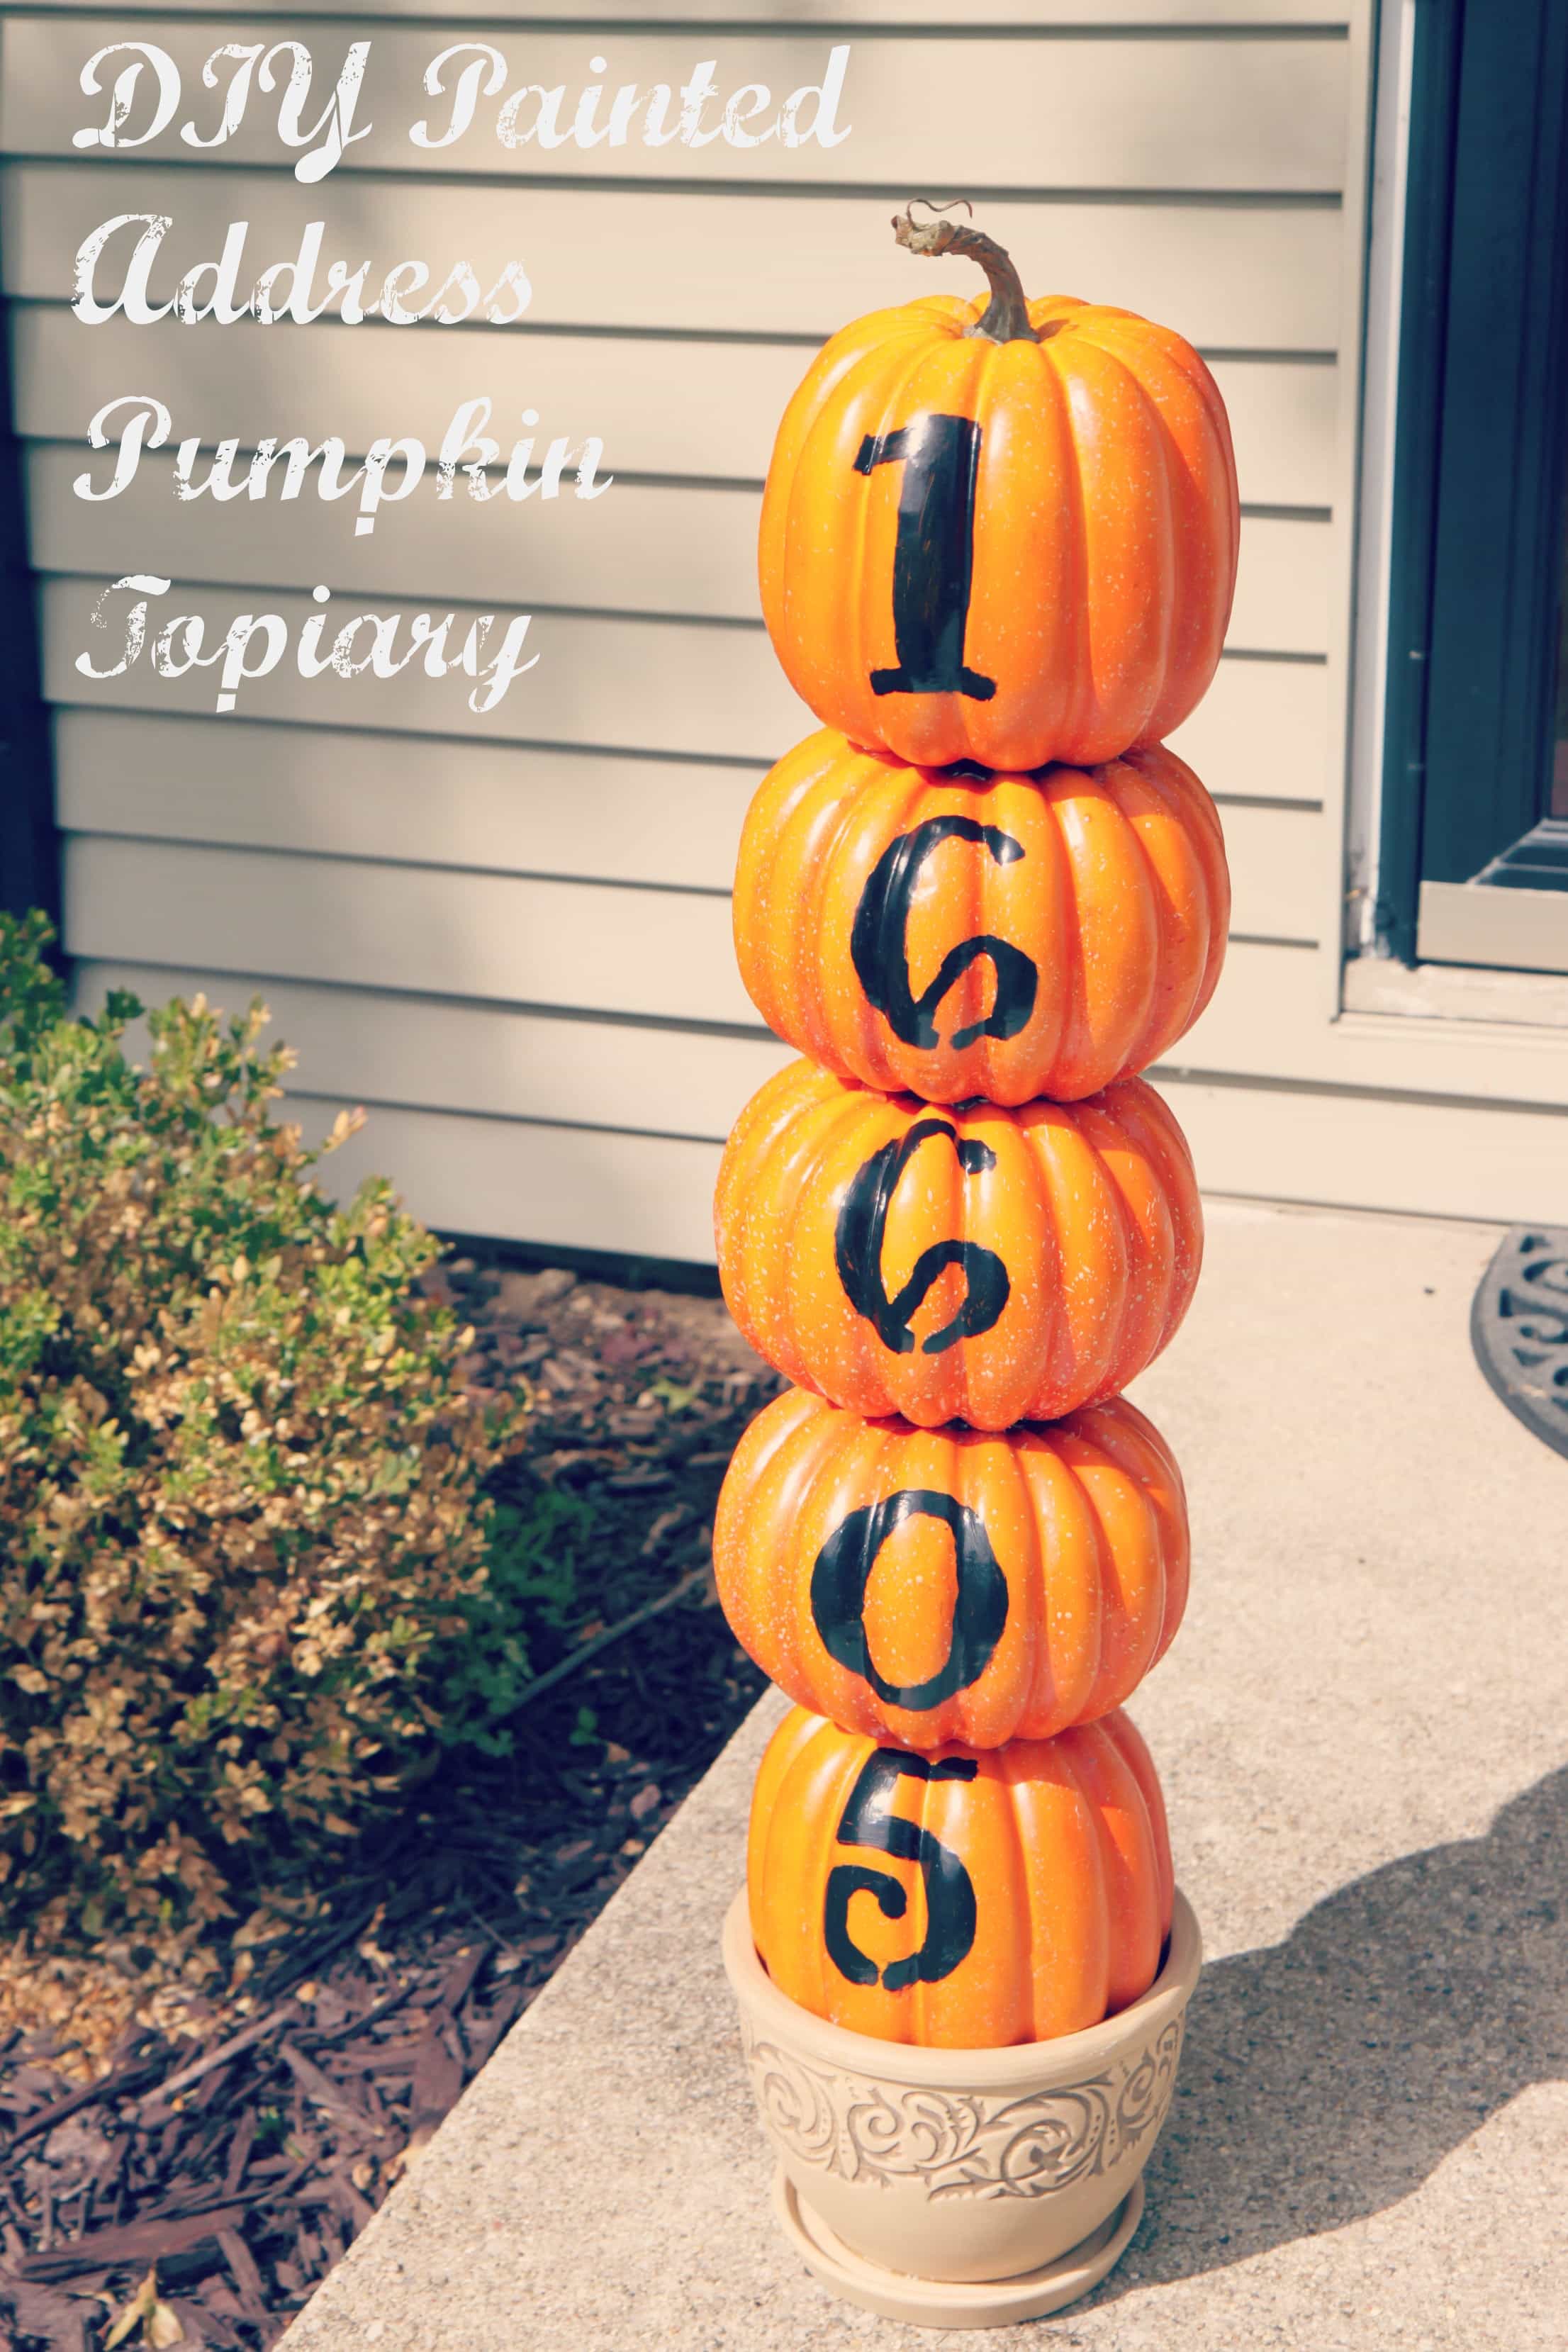 Painted Address Pumpkin Topiary